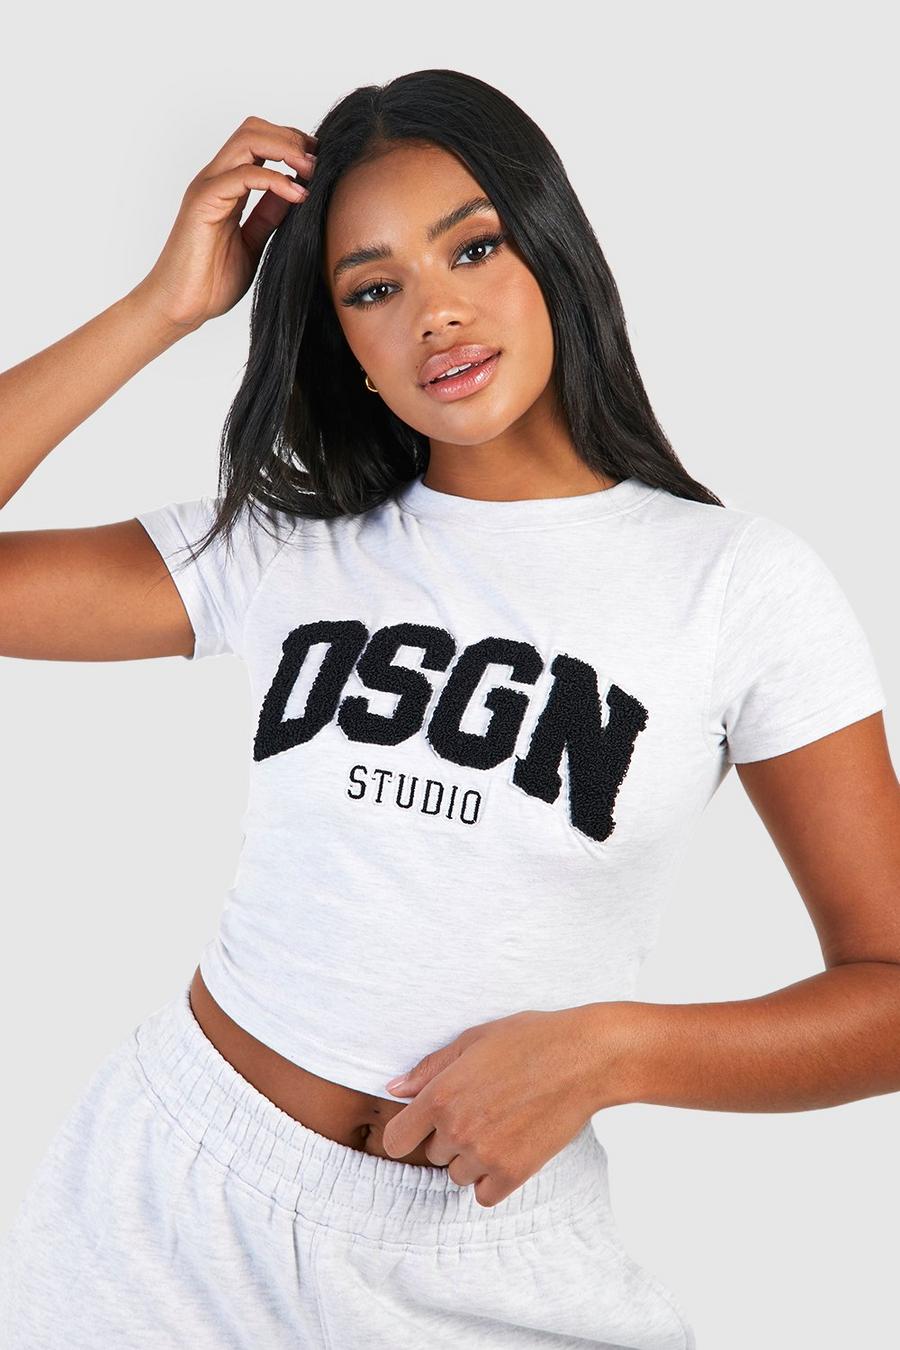 T-shirt en tissu éponge à slogan Dsgn Studio, Ash grey